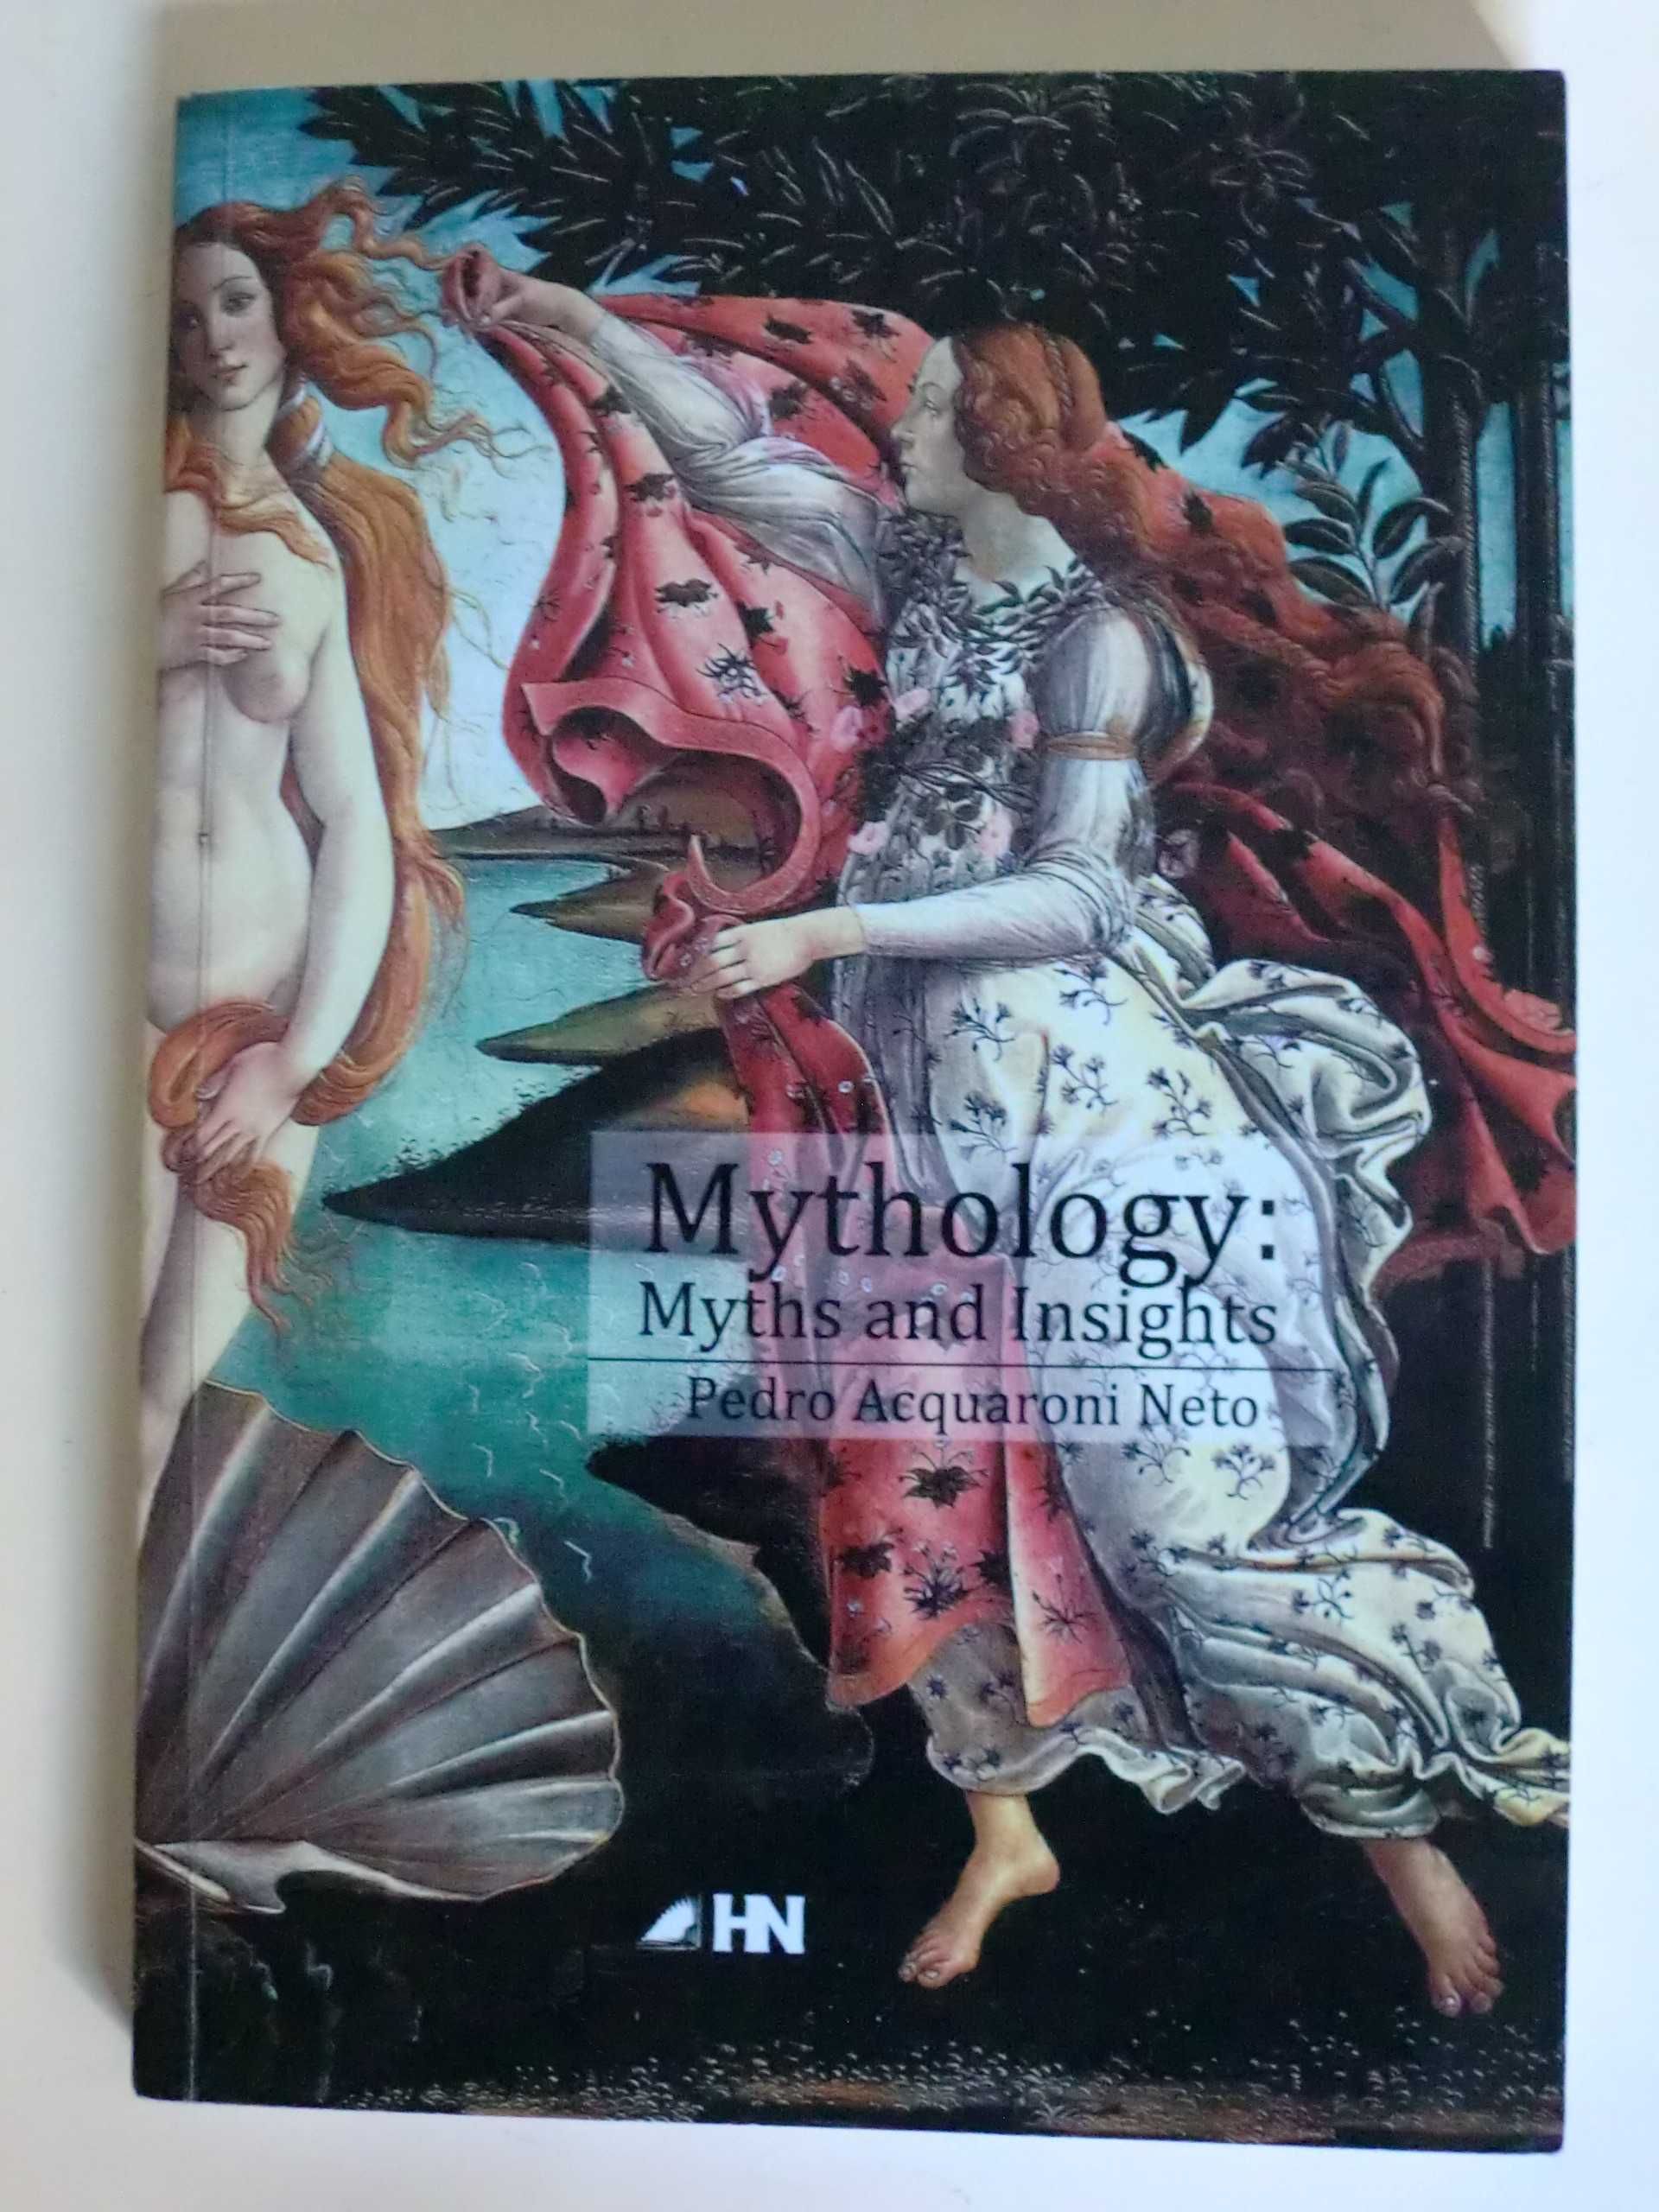 Mythology
Myths and Insights
de Pedro Acquaroni Neto